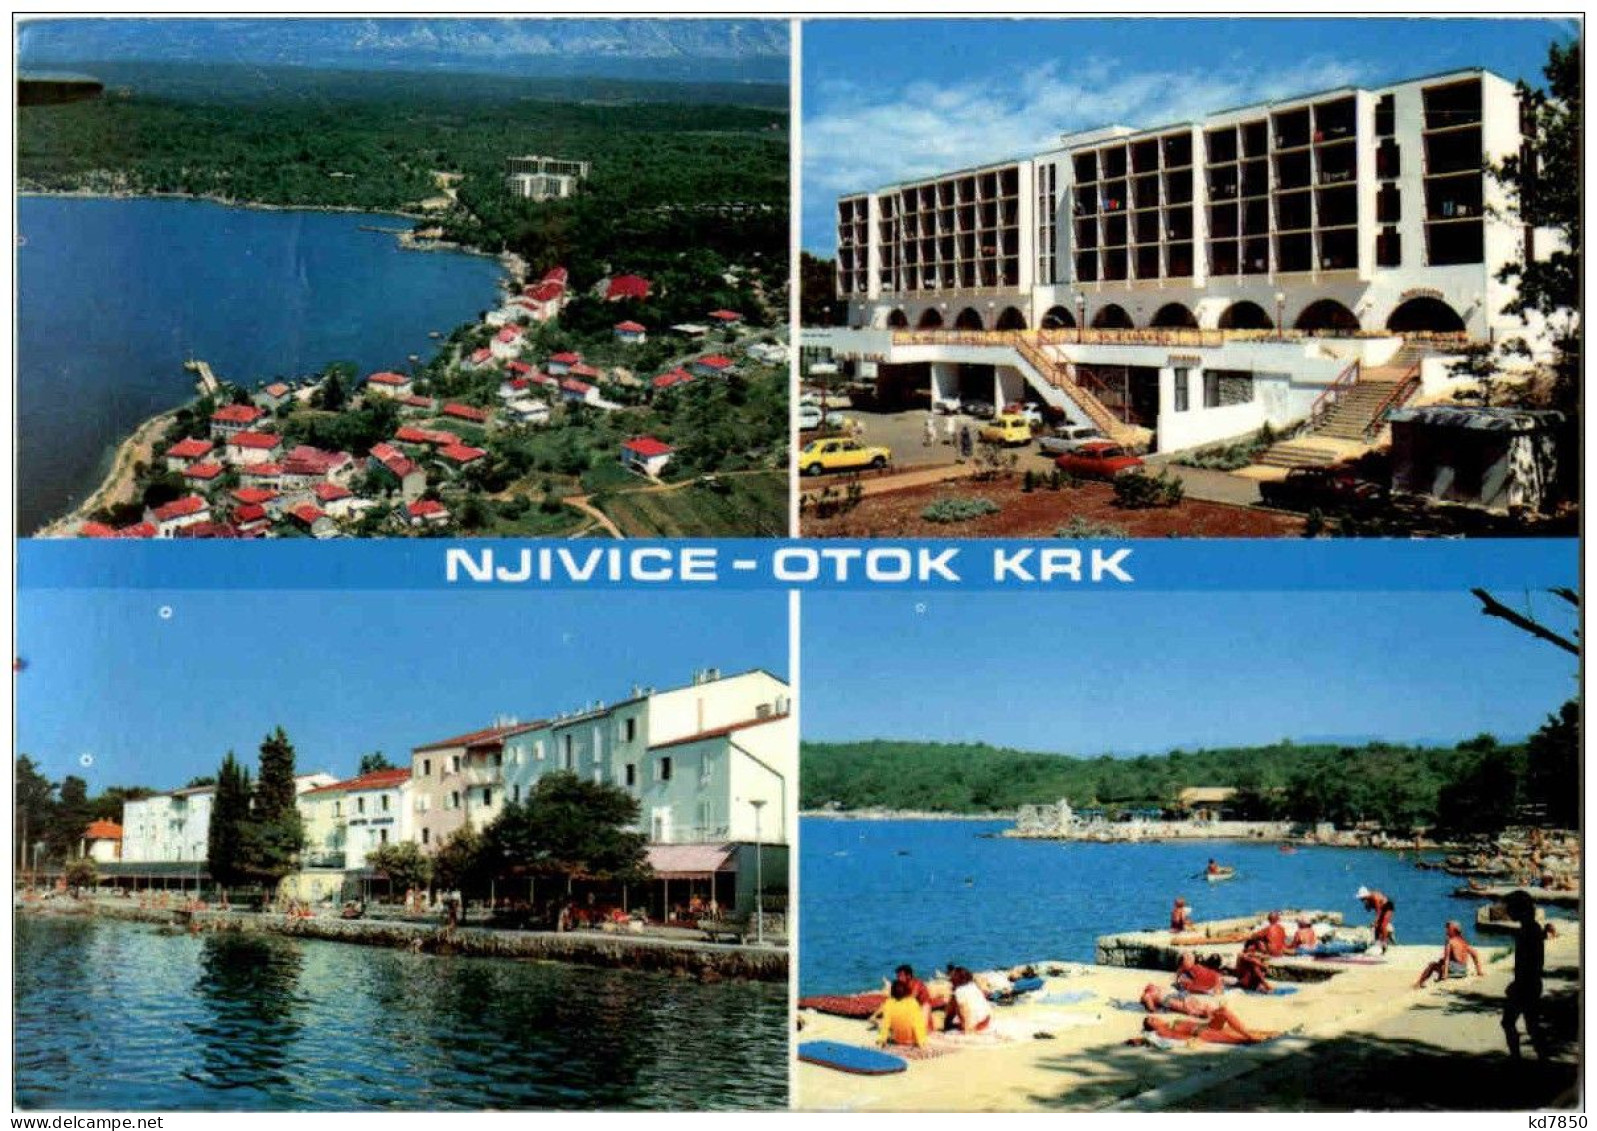 Njivice - Otok Krk - Croazia